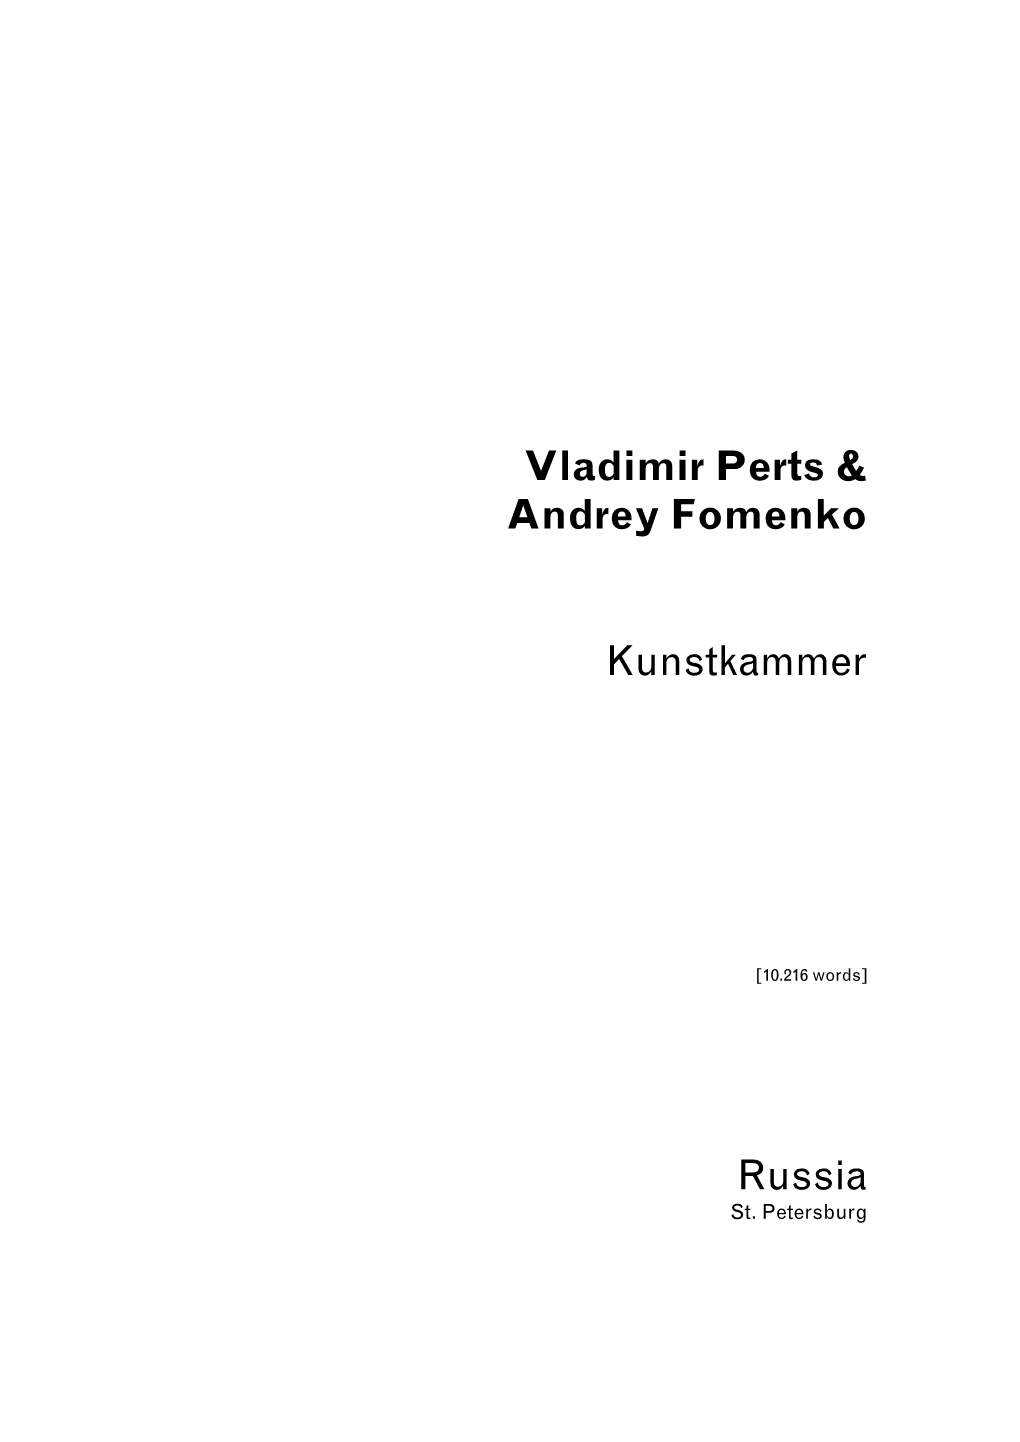 Vladimir Perts and Andrey Fomenko Kunstkammer / Russia / St